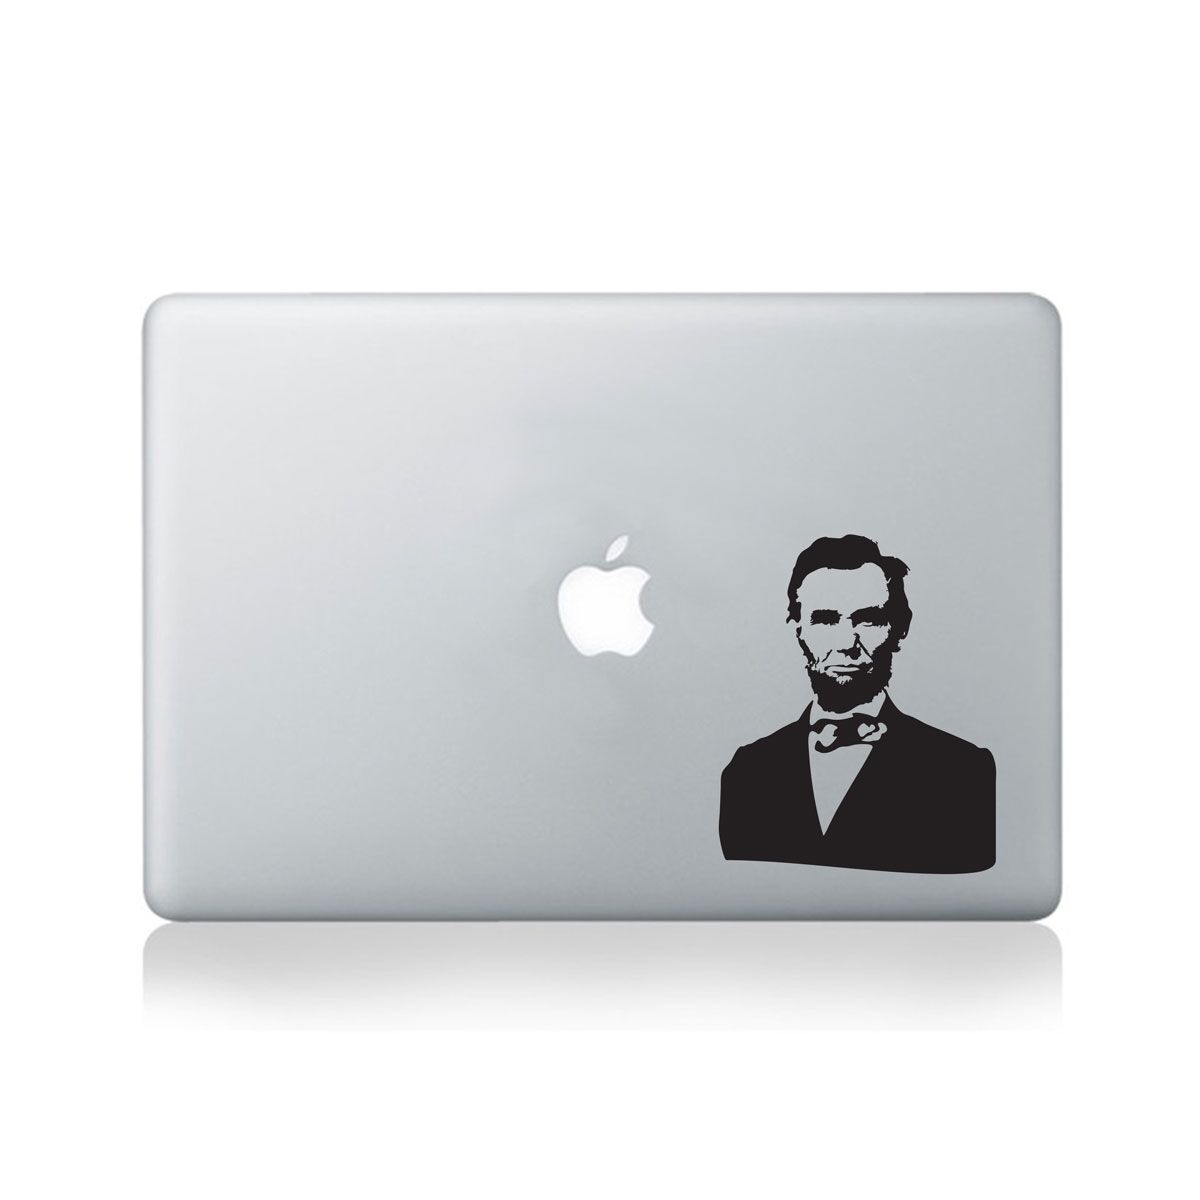 Abraham Lincoln Portrait Macbook Decal